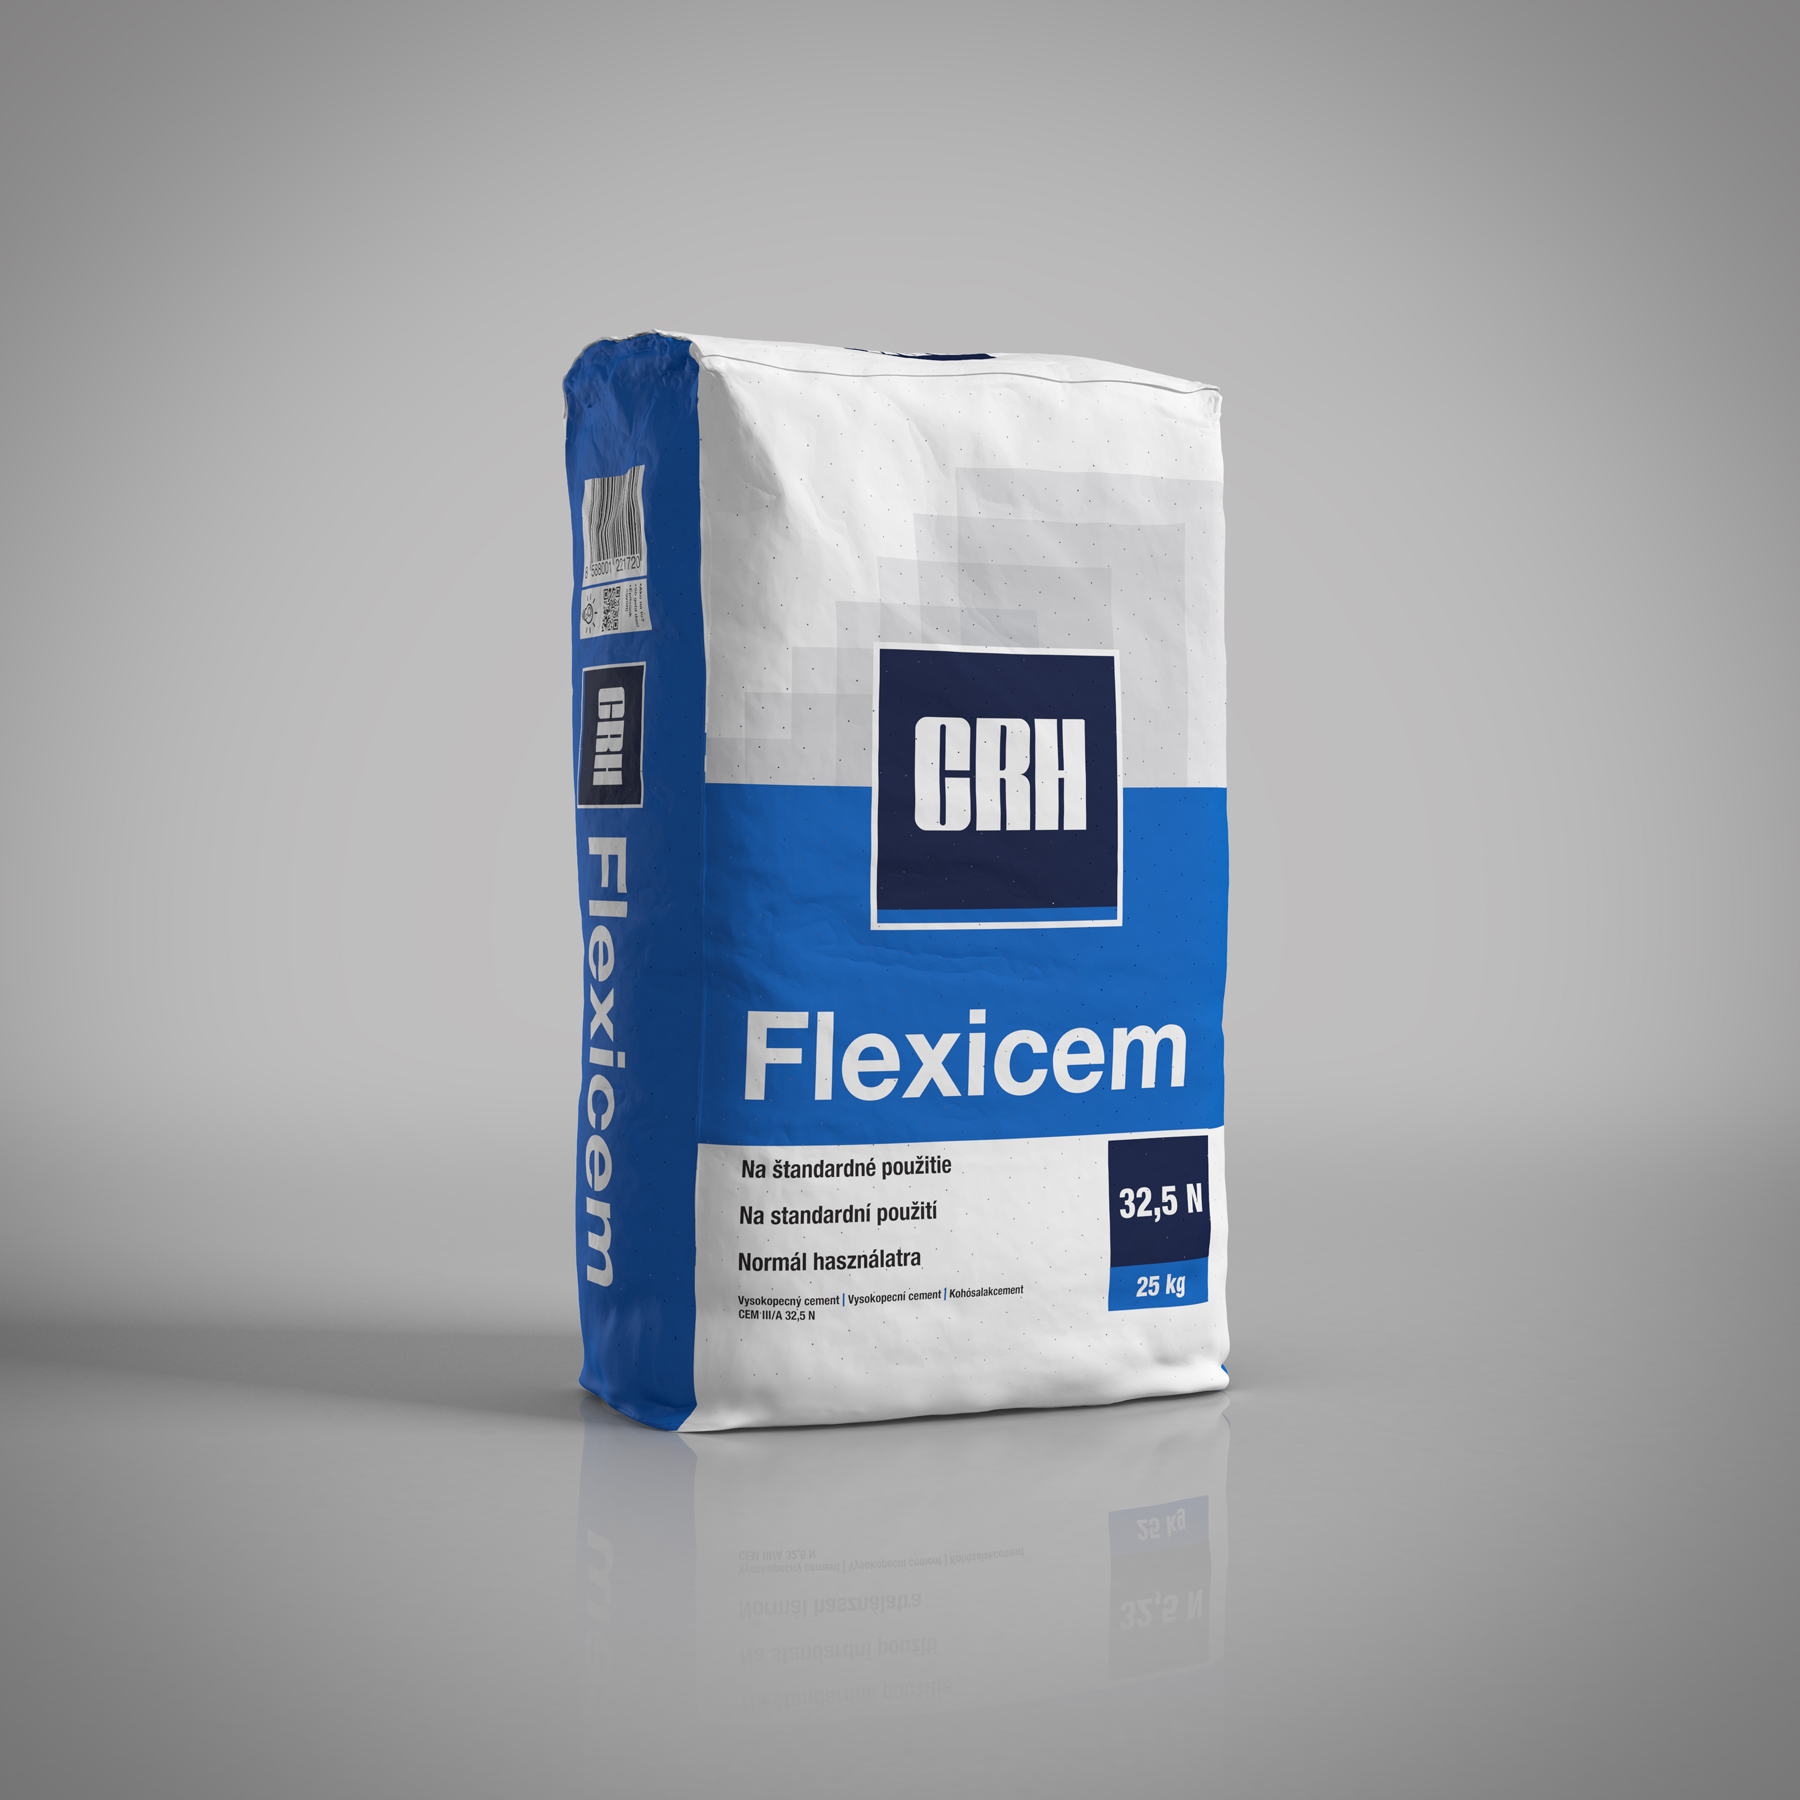 Flexicem bag